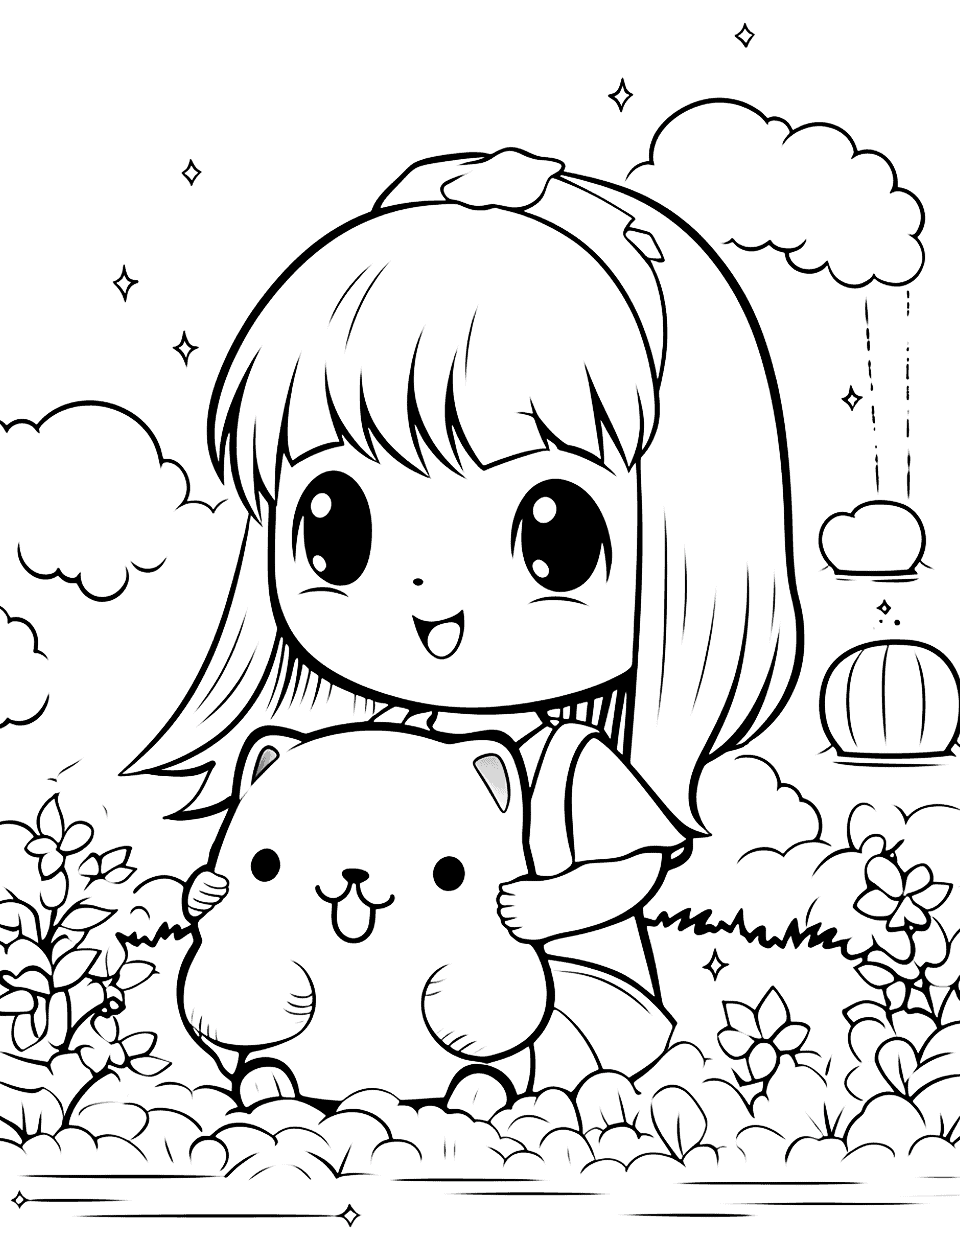 Anime Girl's Adorable Animal Friend Kawaii Coloring Page - An Anime girl playing with her adorable Kawaii animal friend in a sunny park.